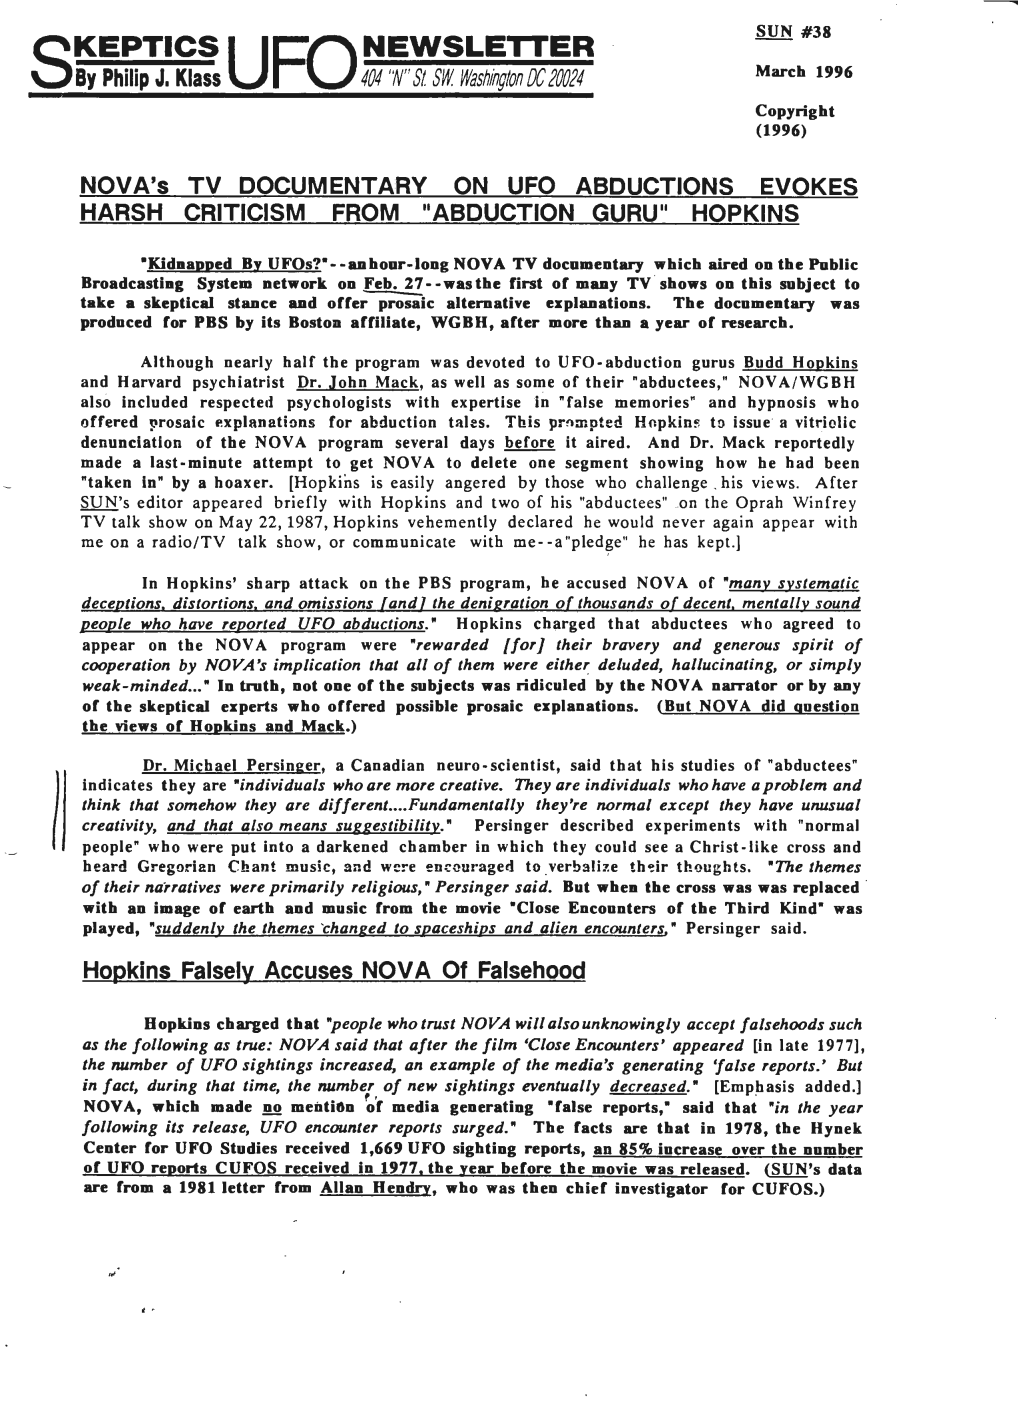 Skeptics UFO Newsletter -2- March 1996 HOPKINS DEMONSTRATES HIS